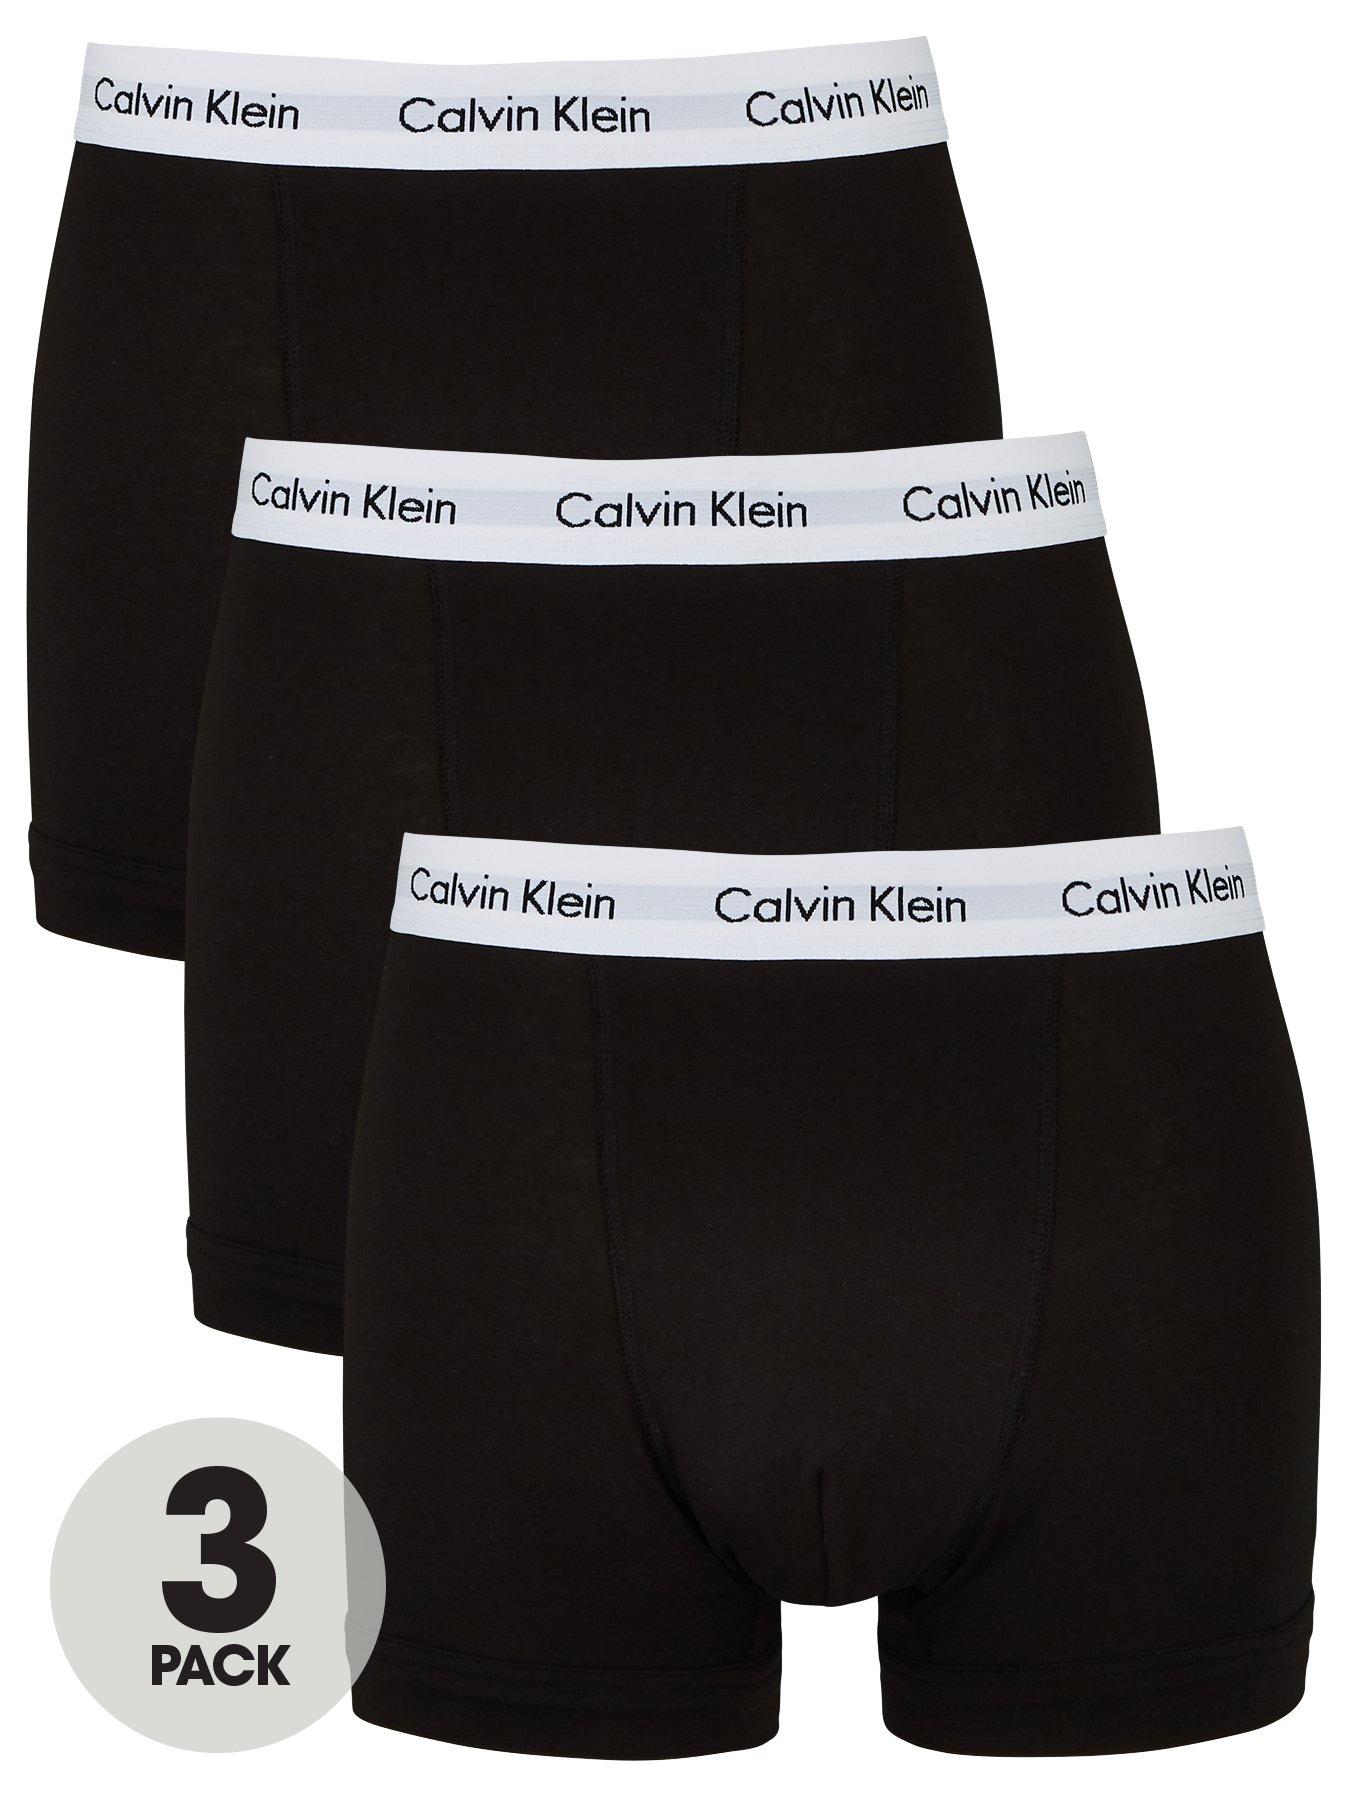 DKNY Mens Boxers 3 Pack New York Soft Underwear Printed Branding on Waist  Cotton 